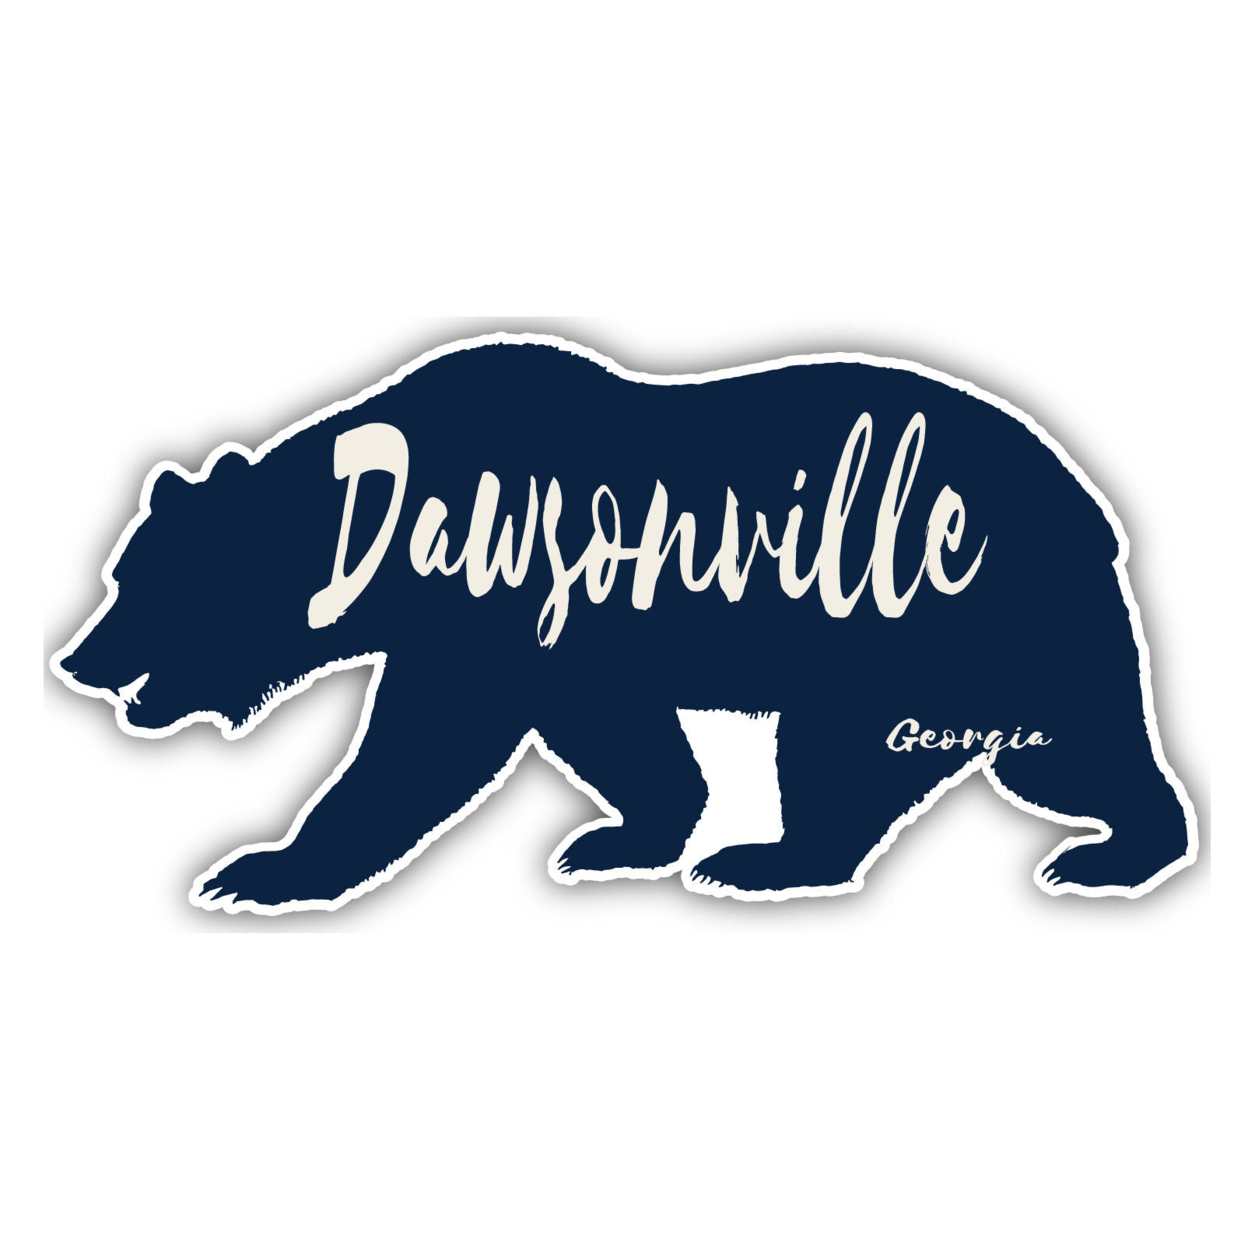 Dawsonville Georgia Souvenir Decorative Stickers (Choose Theme And Size) - Single Unit, 4-Inch, Bear